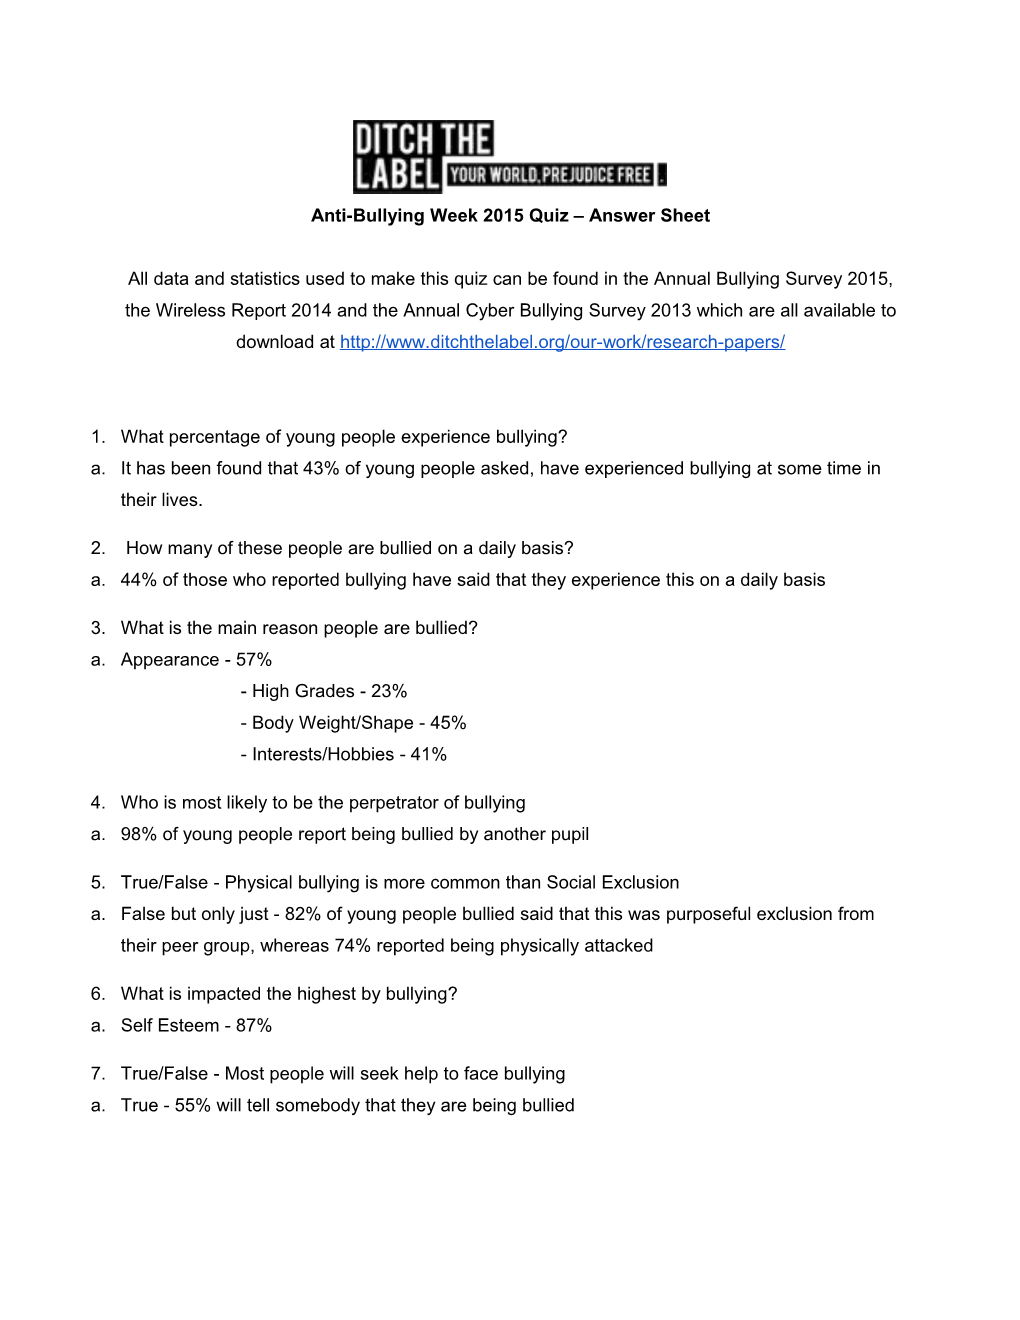 Anti-Bullying Week 2015 Quiz Answer Sheet